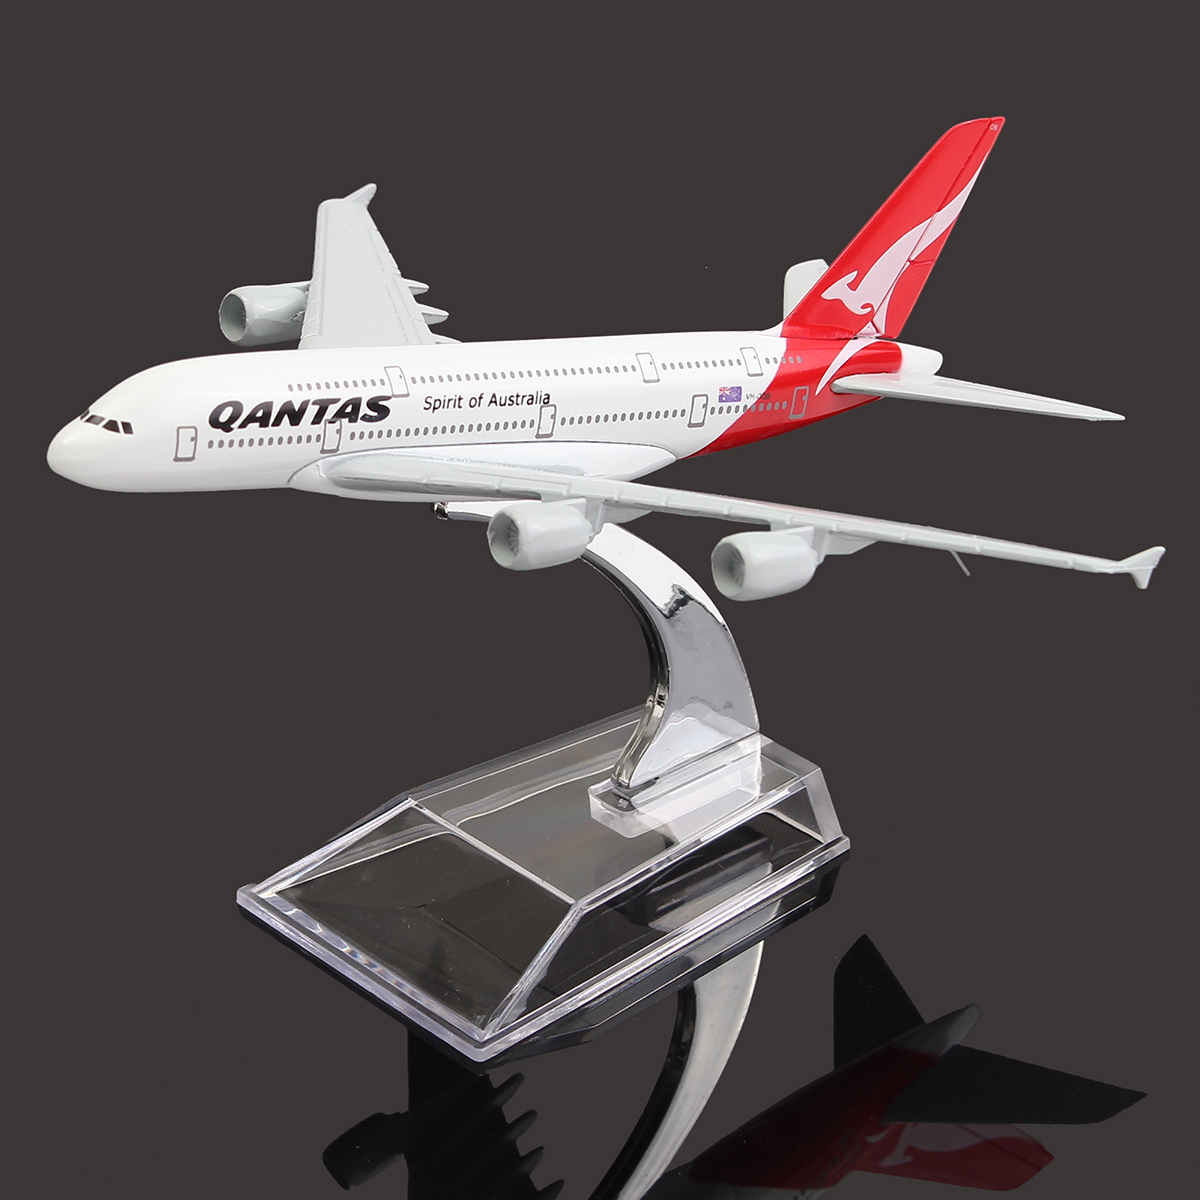 

16cm Airplane Metal Plane Model Aircraft A380 AUSTRALIA QANTAS Aeroplane Scale Desk Toy